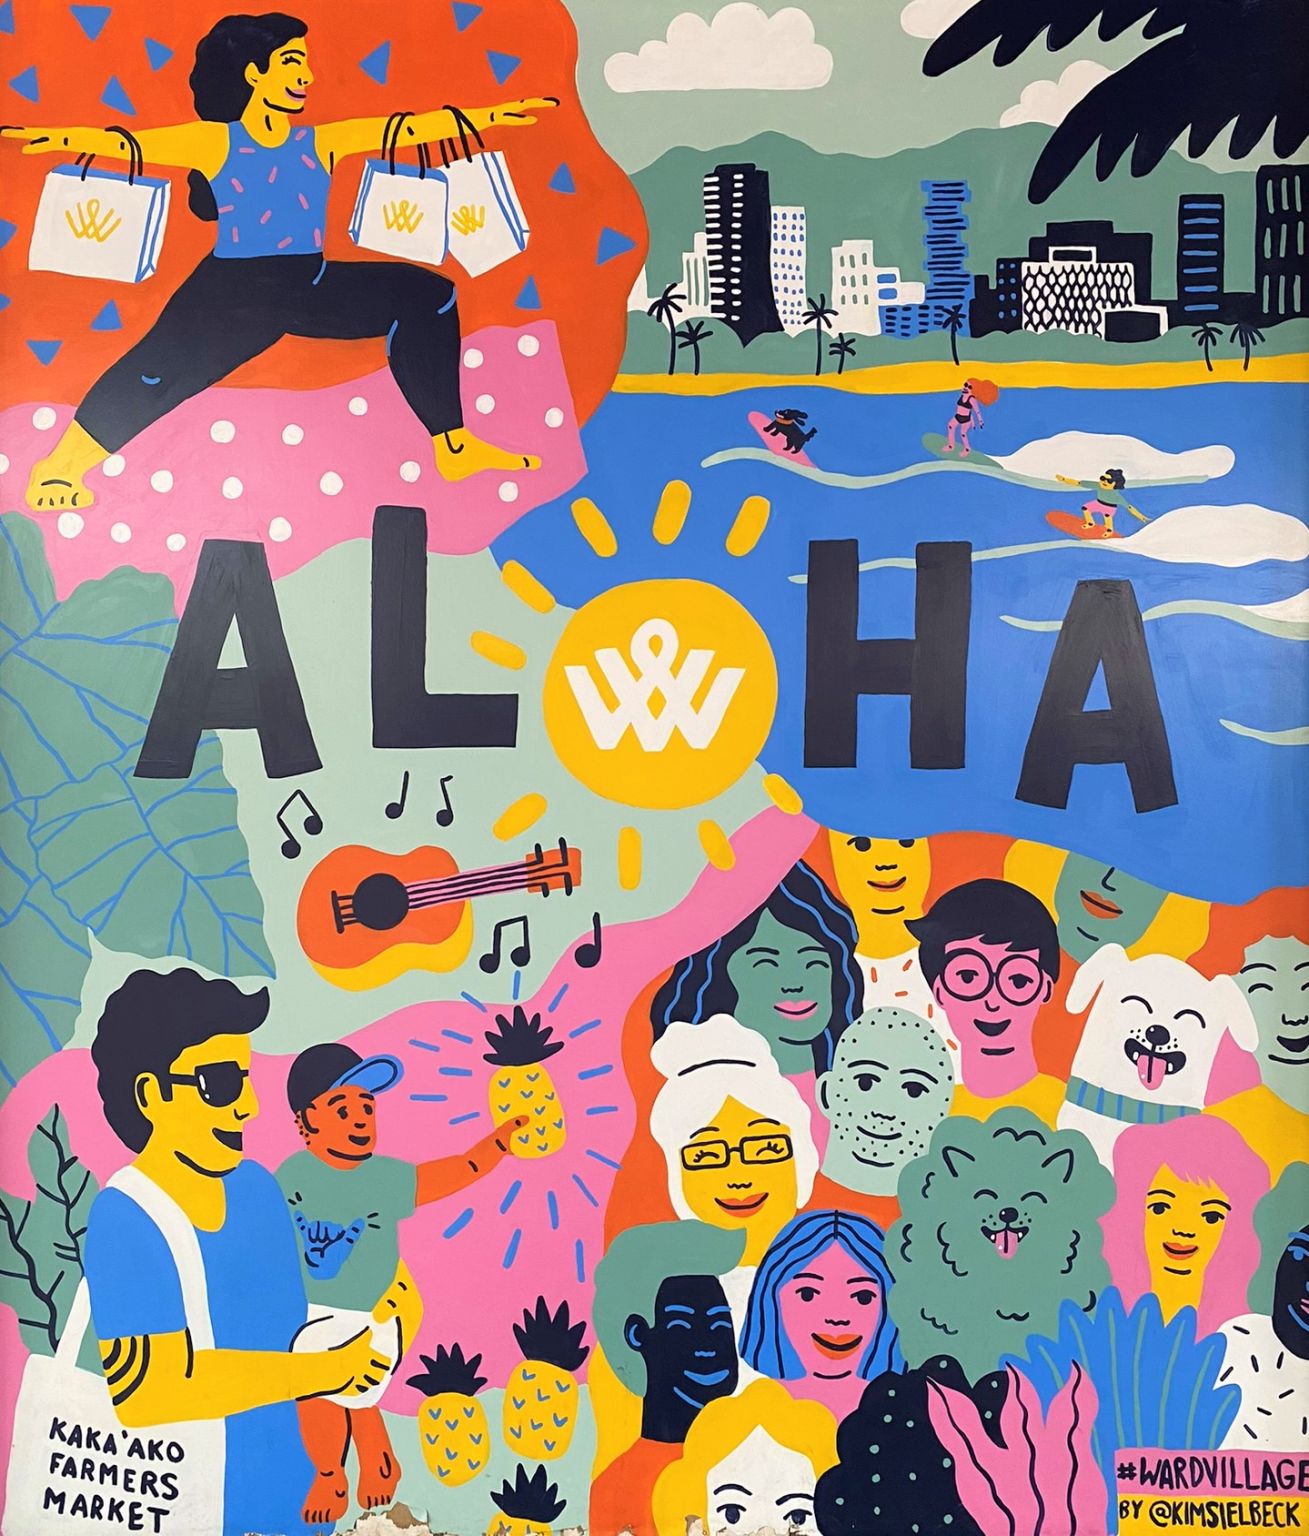 How to “aloha” your brand